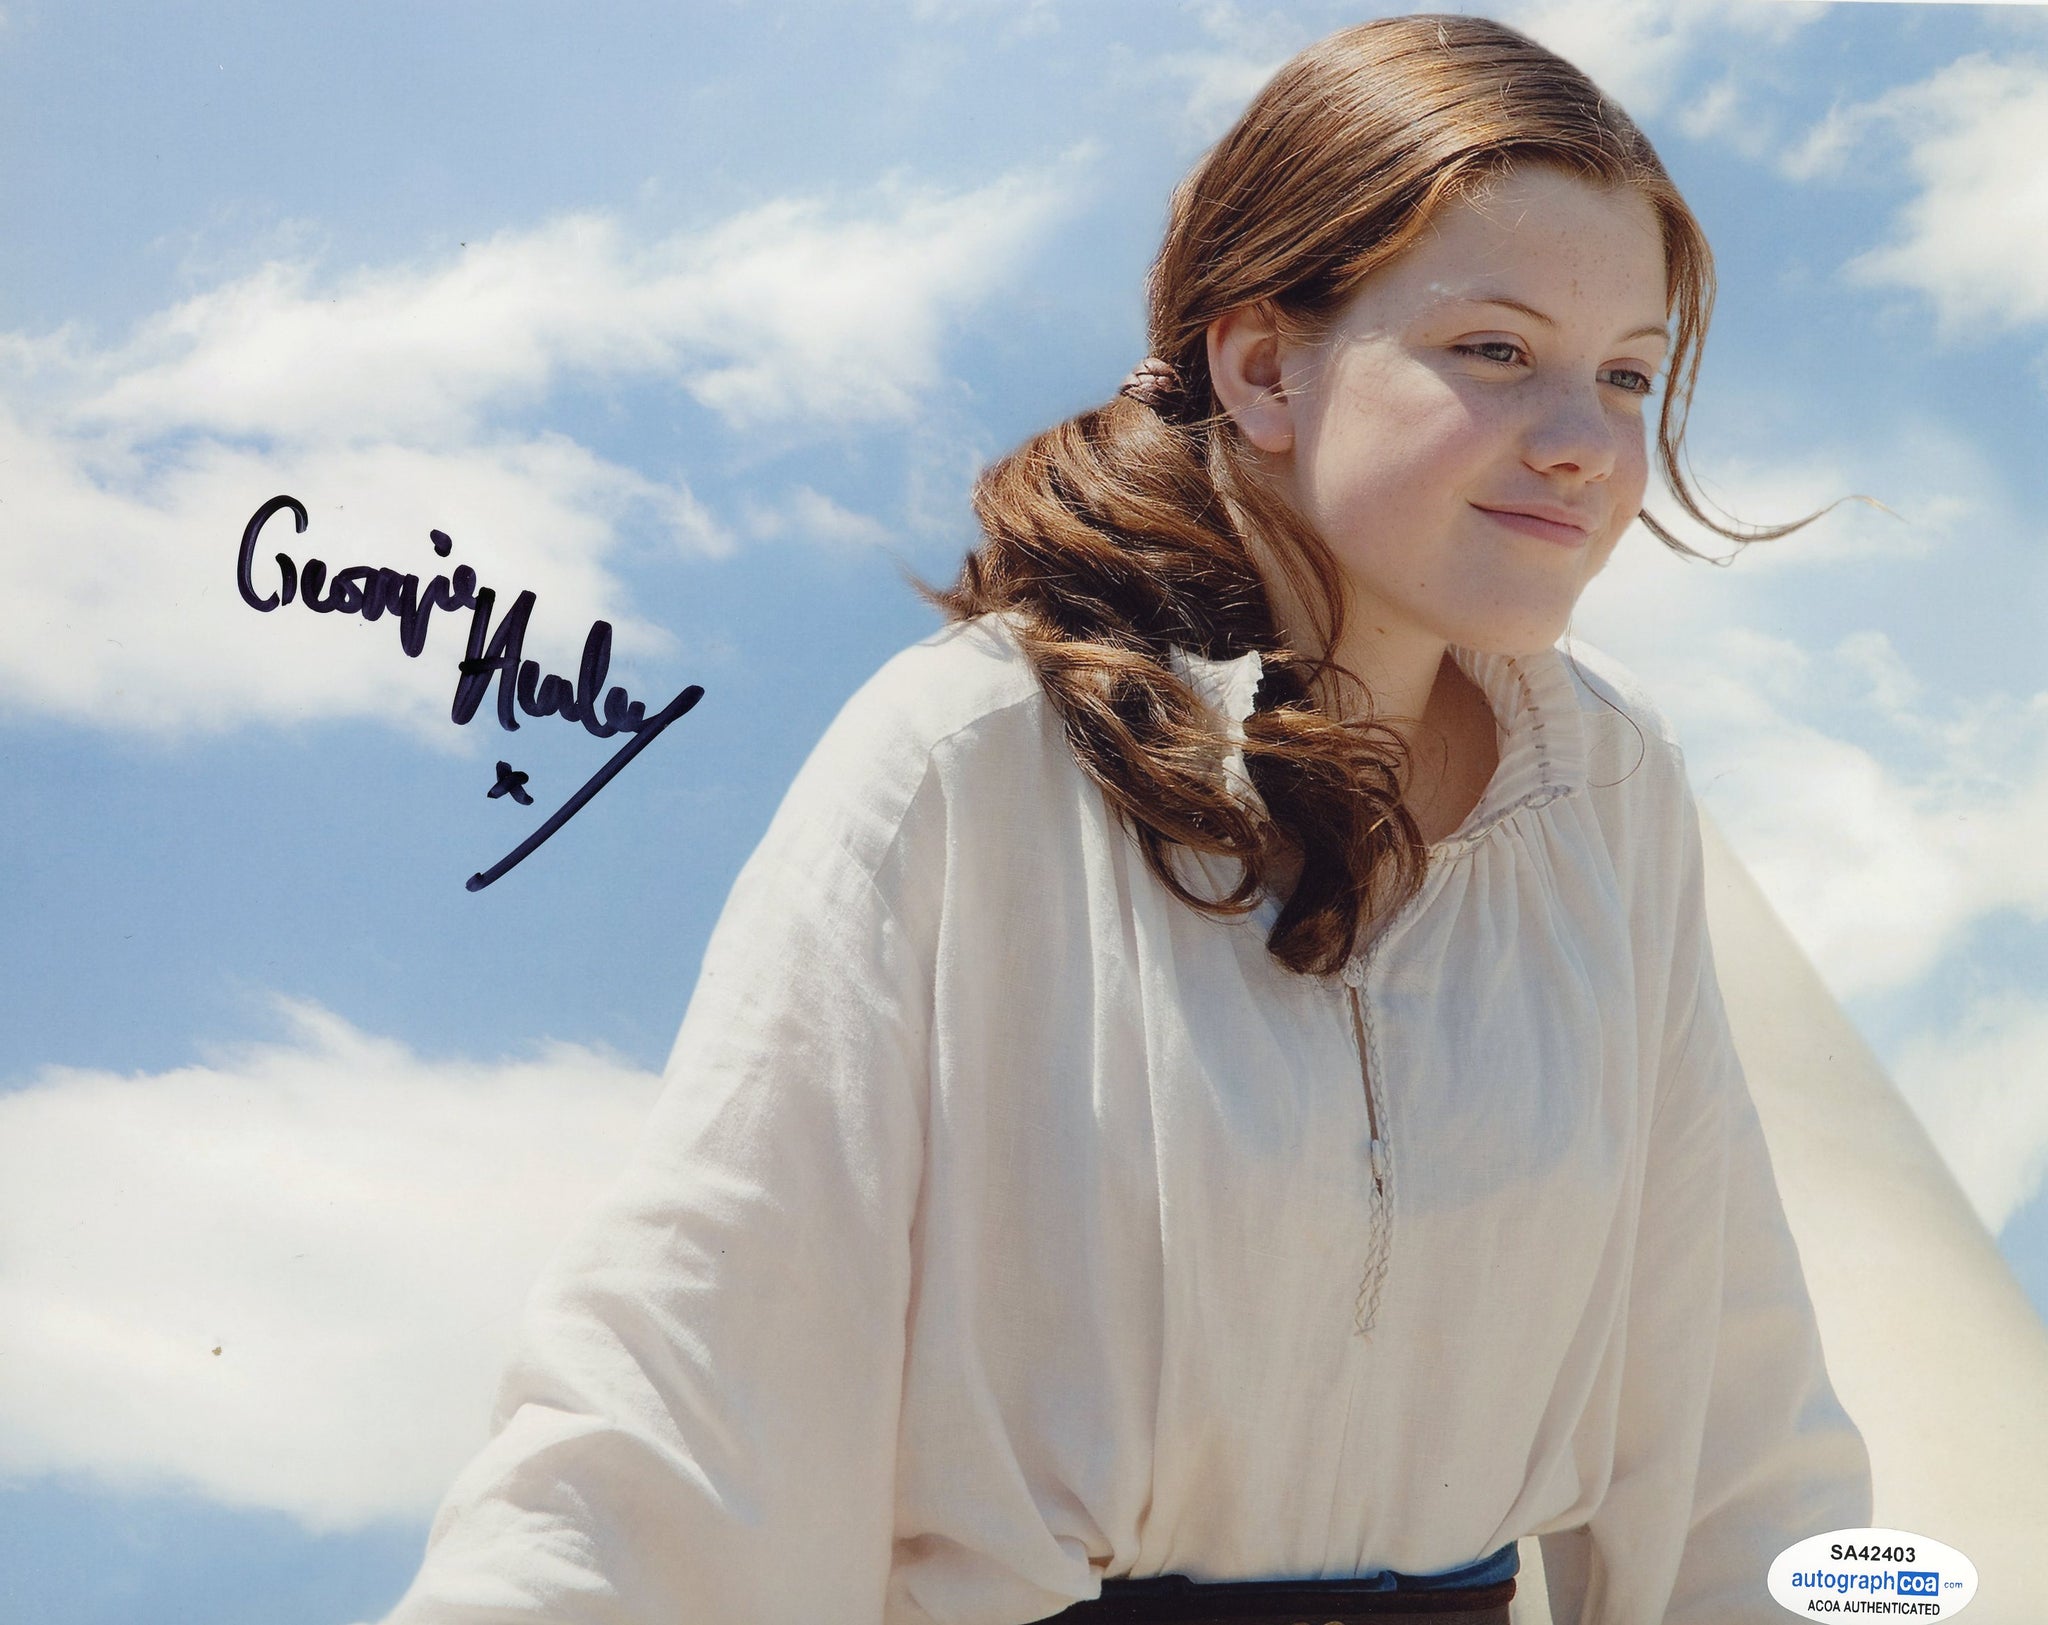 Georgie Henley Chronicles of Narnia Signed Autograph 8x10 Photo ACOA #2